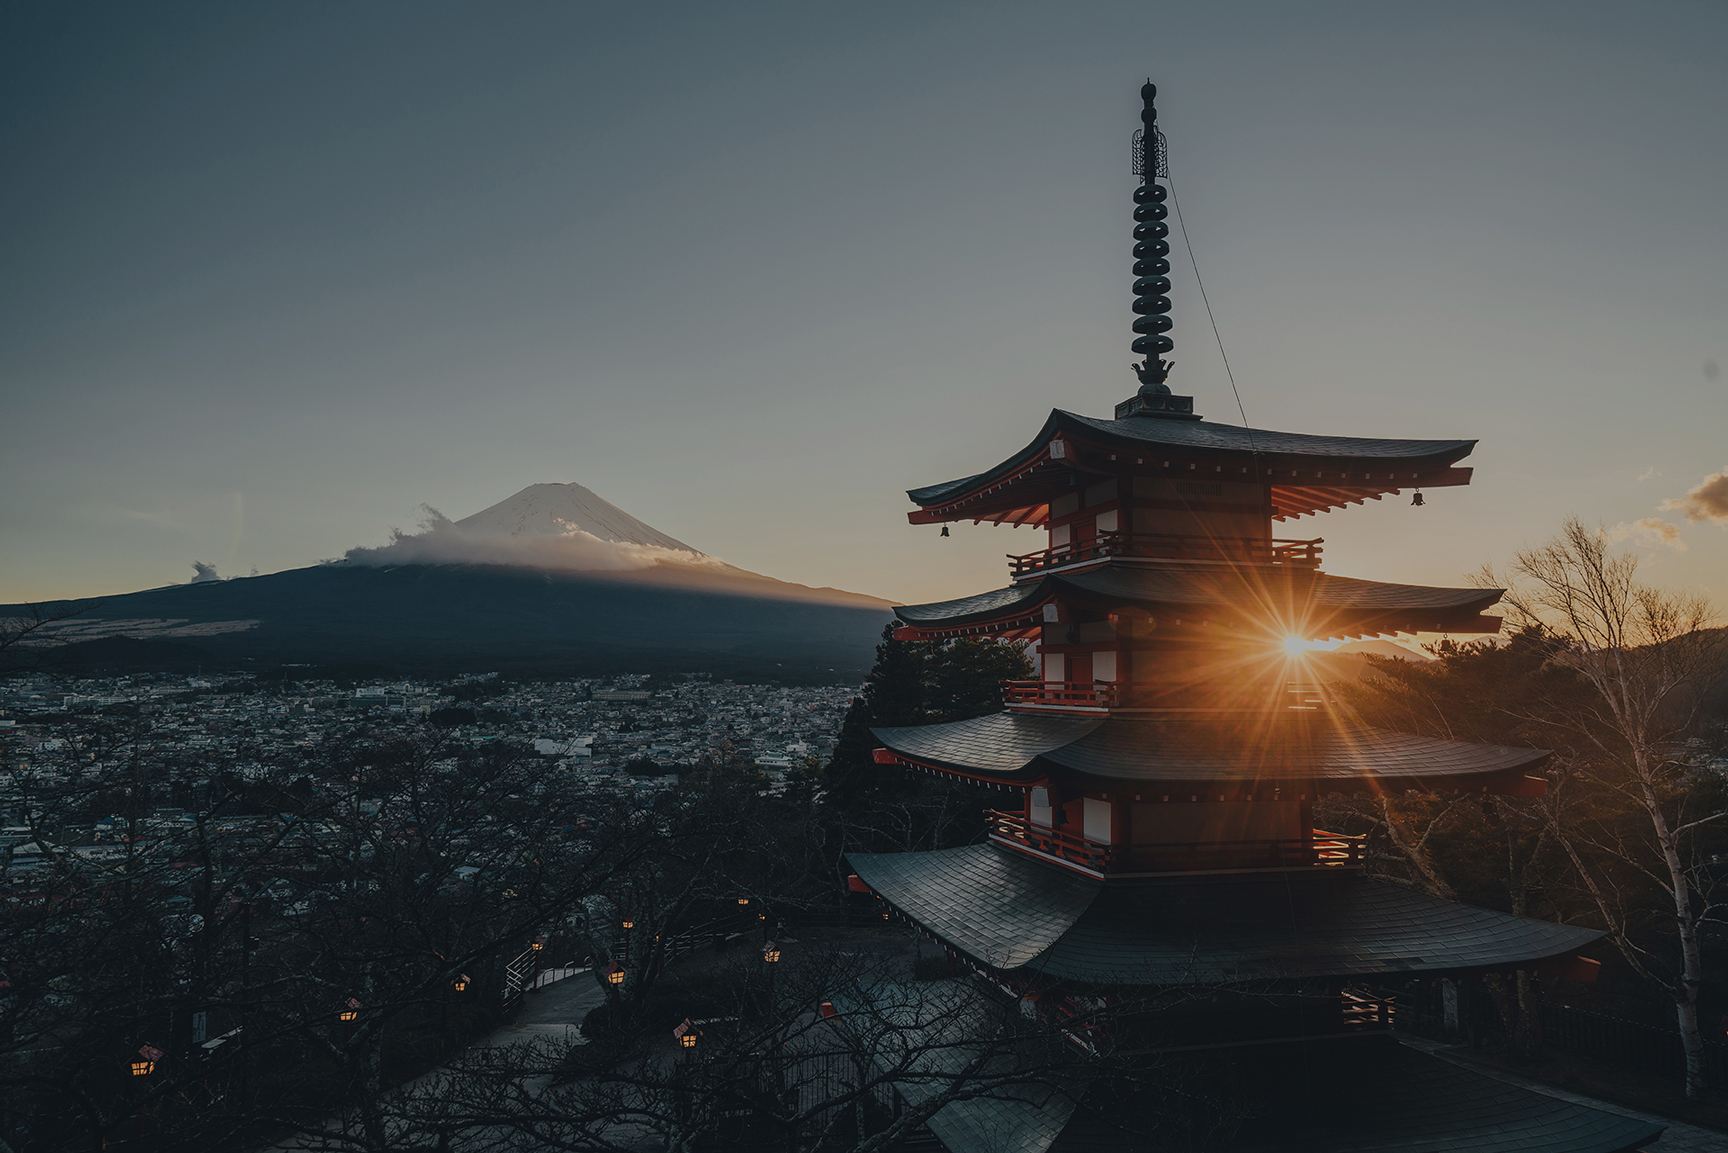 Japan's Chureito Pagoda with Mount Fuji in the background symbolises ARCO's "おもてなし"